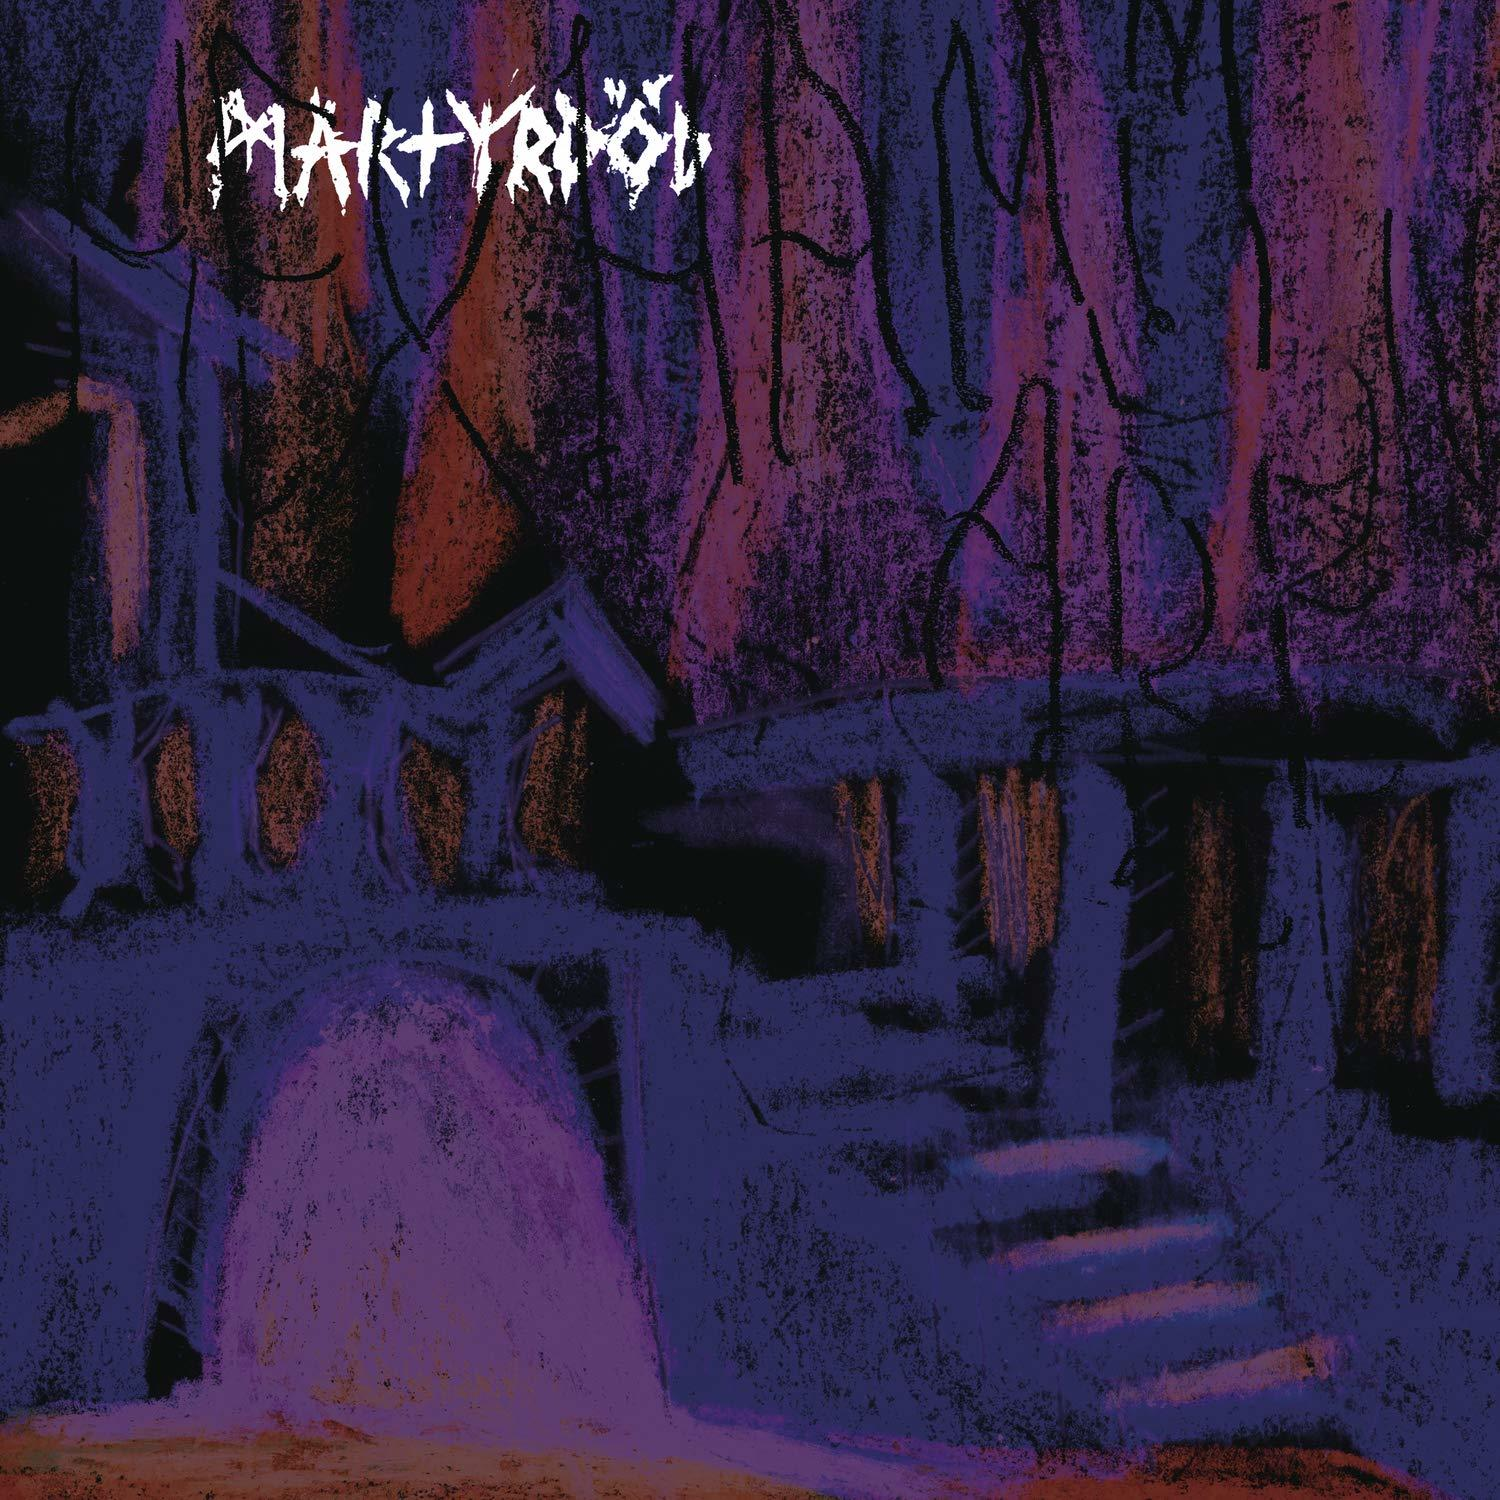 Martyrdöd - - Hexhammaren (Vinyl)